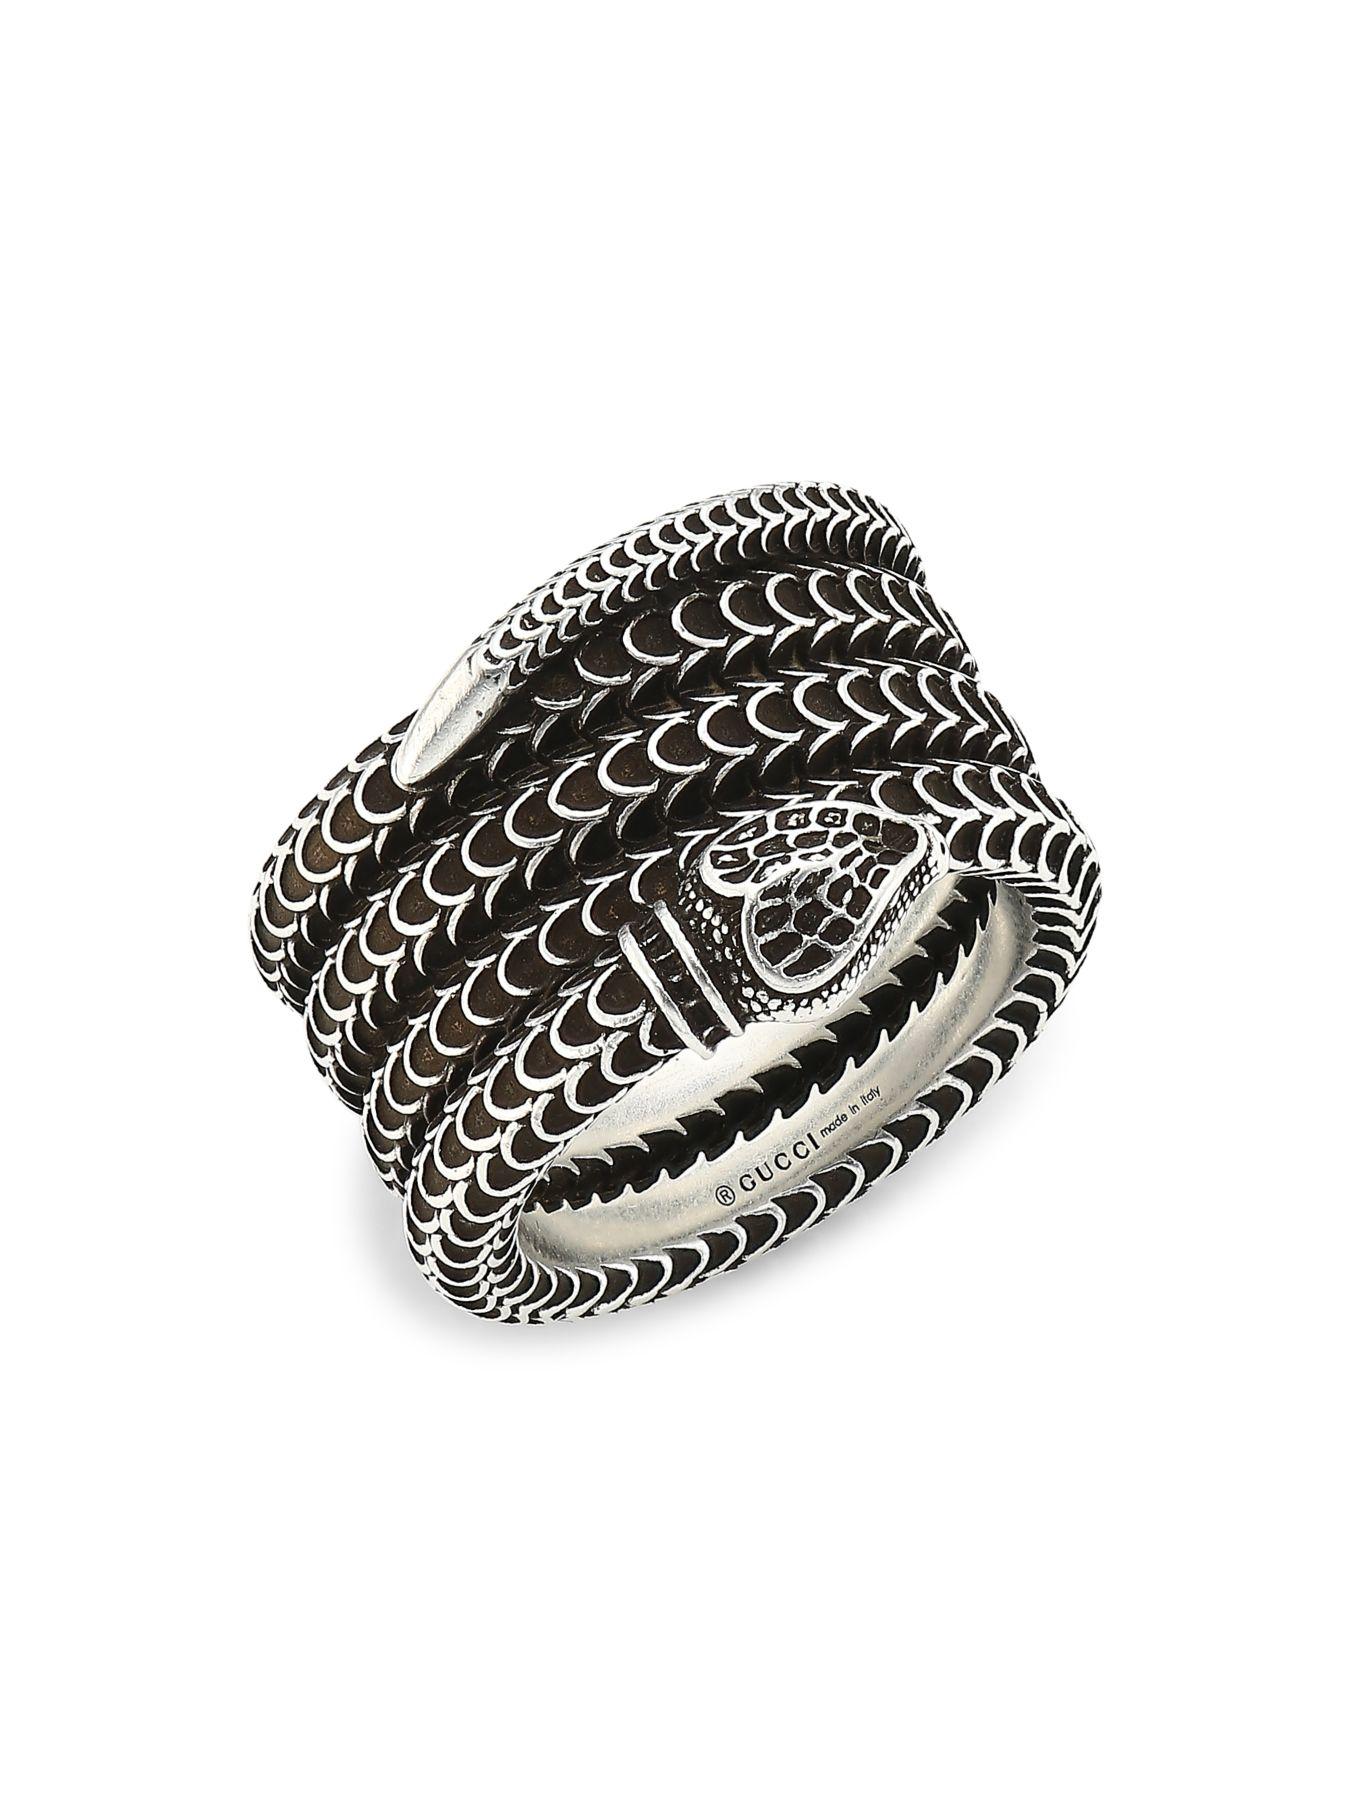 Gucci Garden Sterling Silver Snake Bracelet in Metallic for Men - Lyst